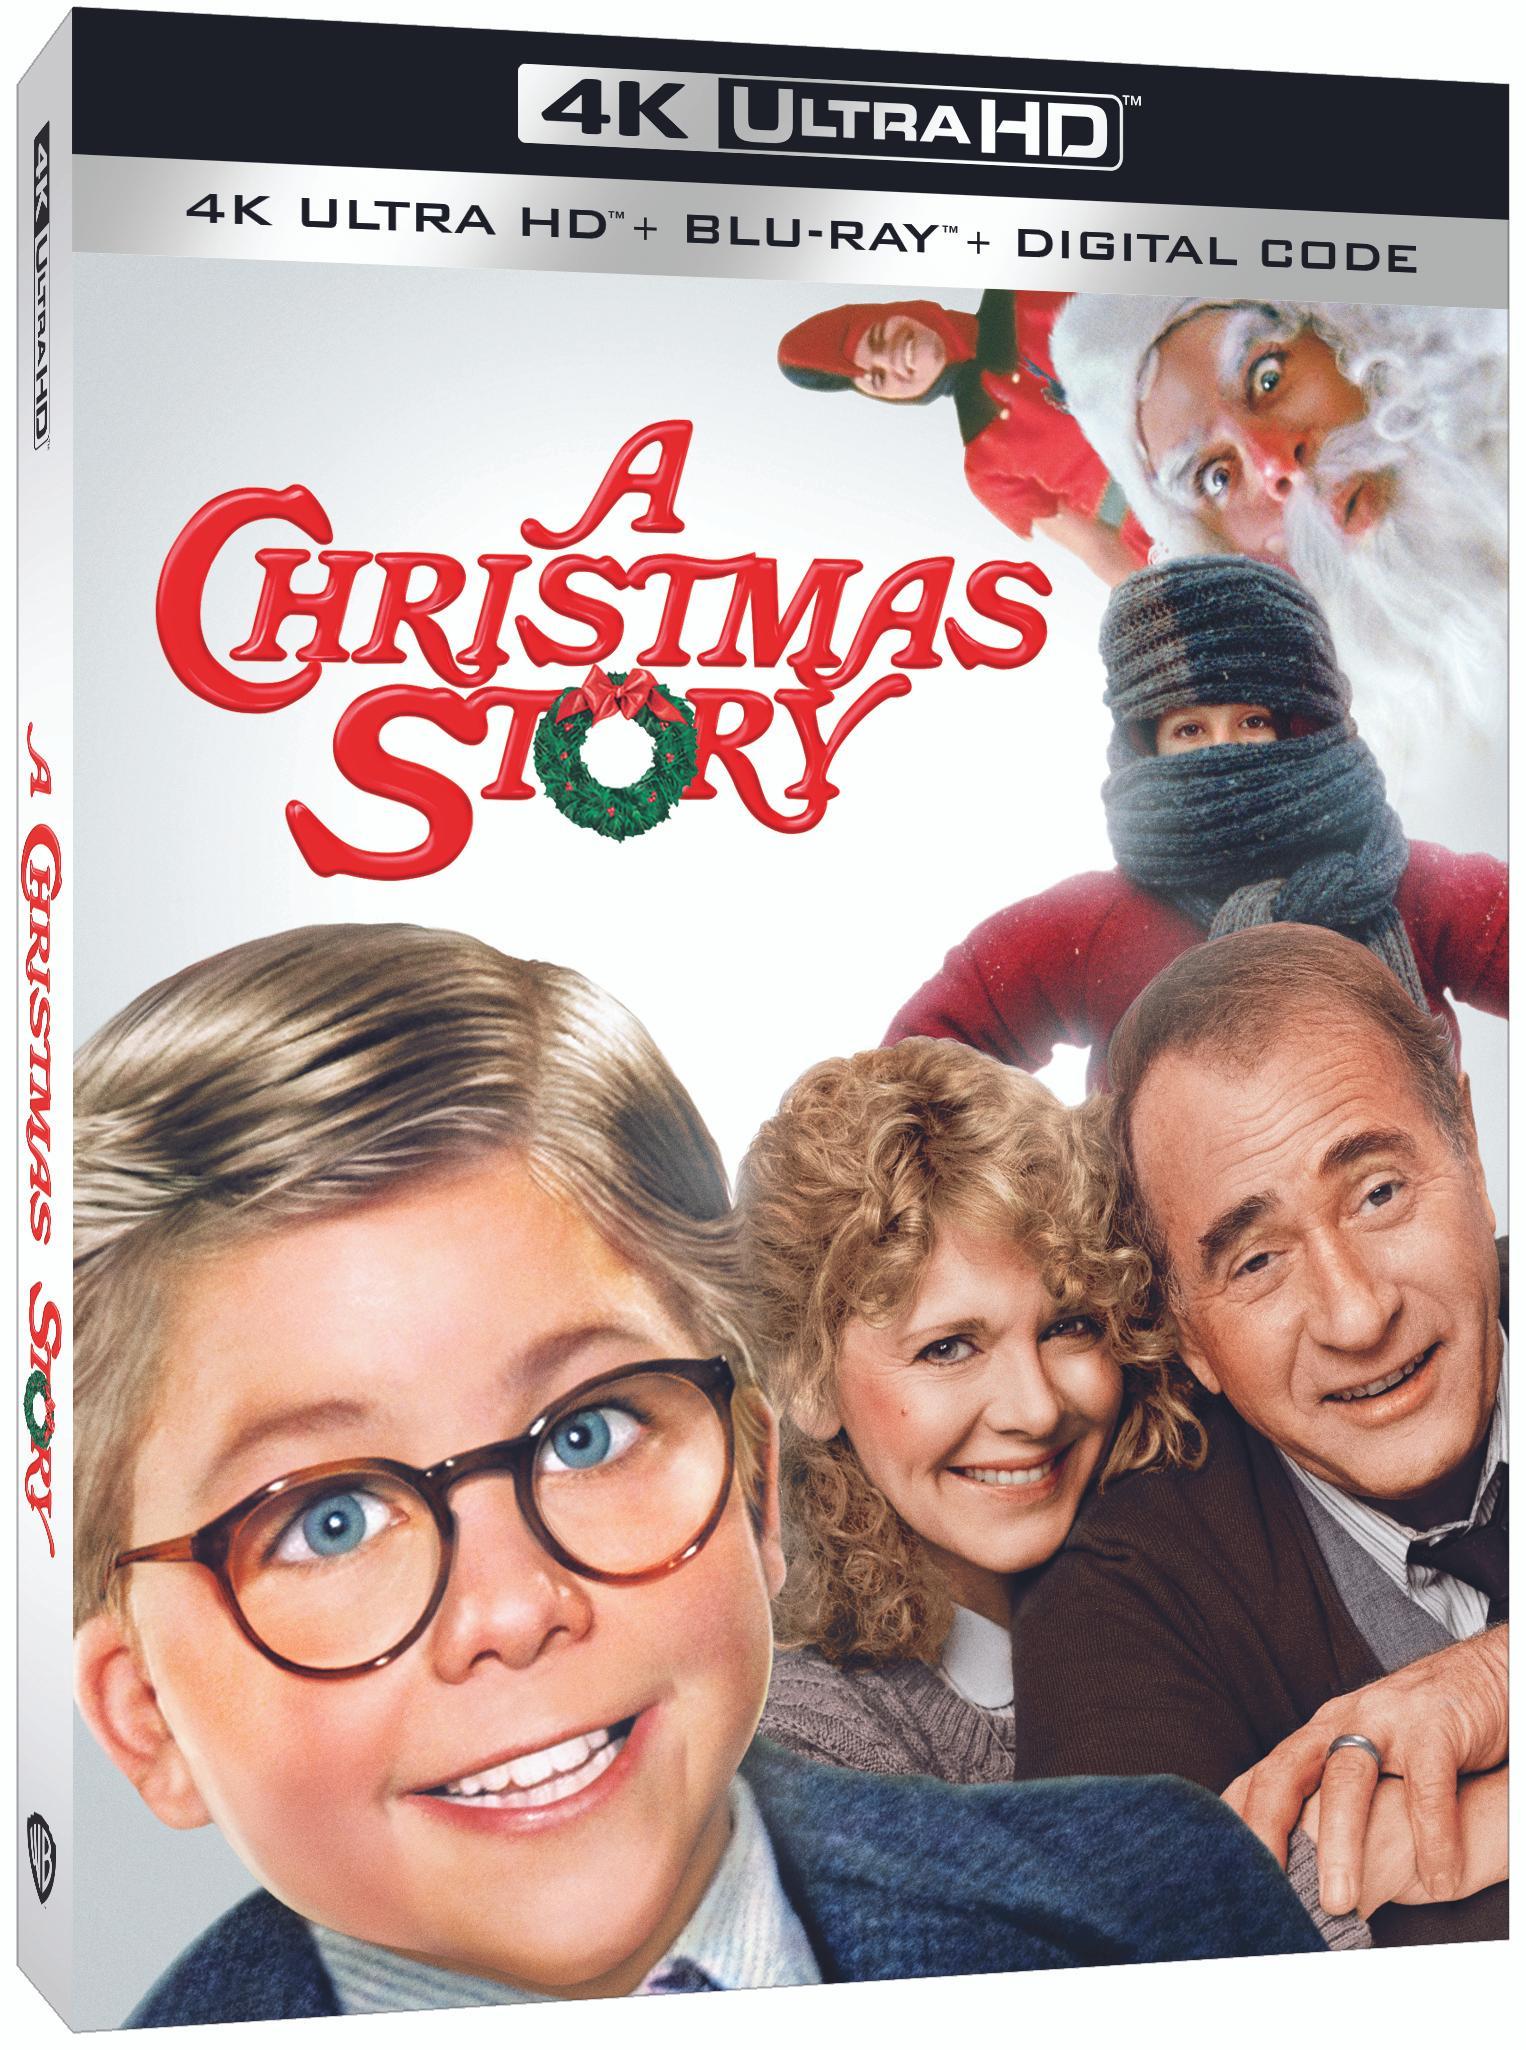 A Christmas Story (4K Ultra HD + Blu-ray + Digital Copy) - image 2 of 4